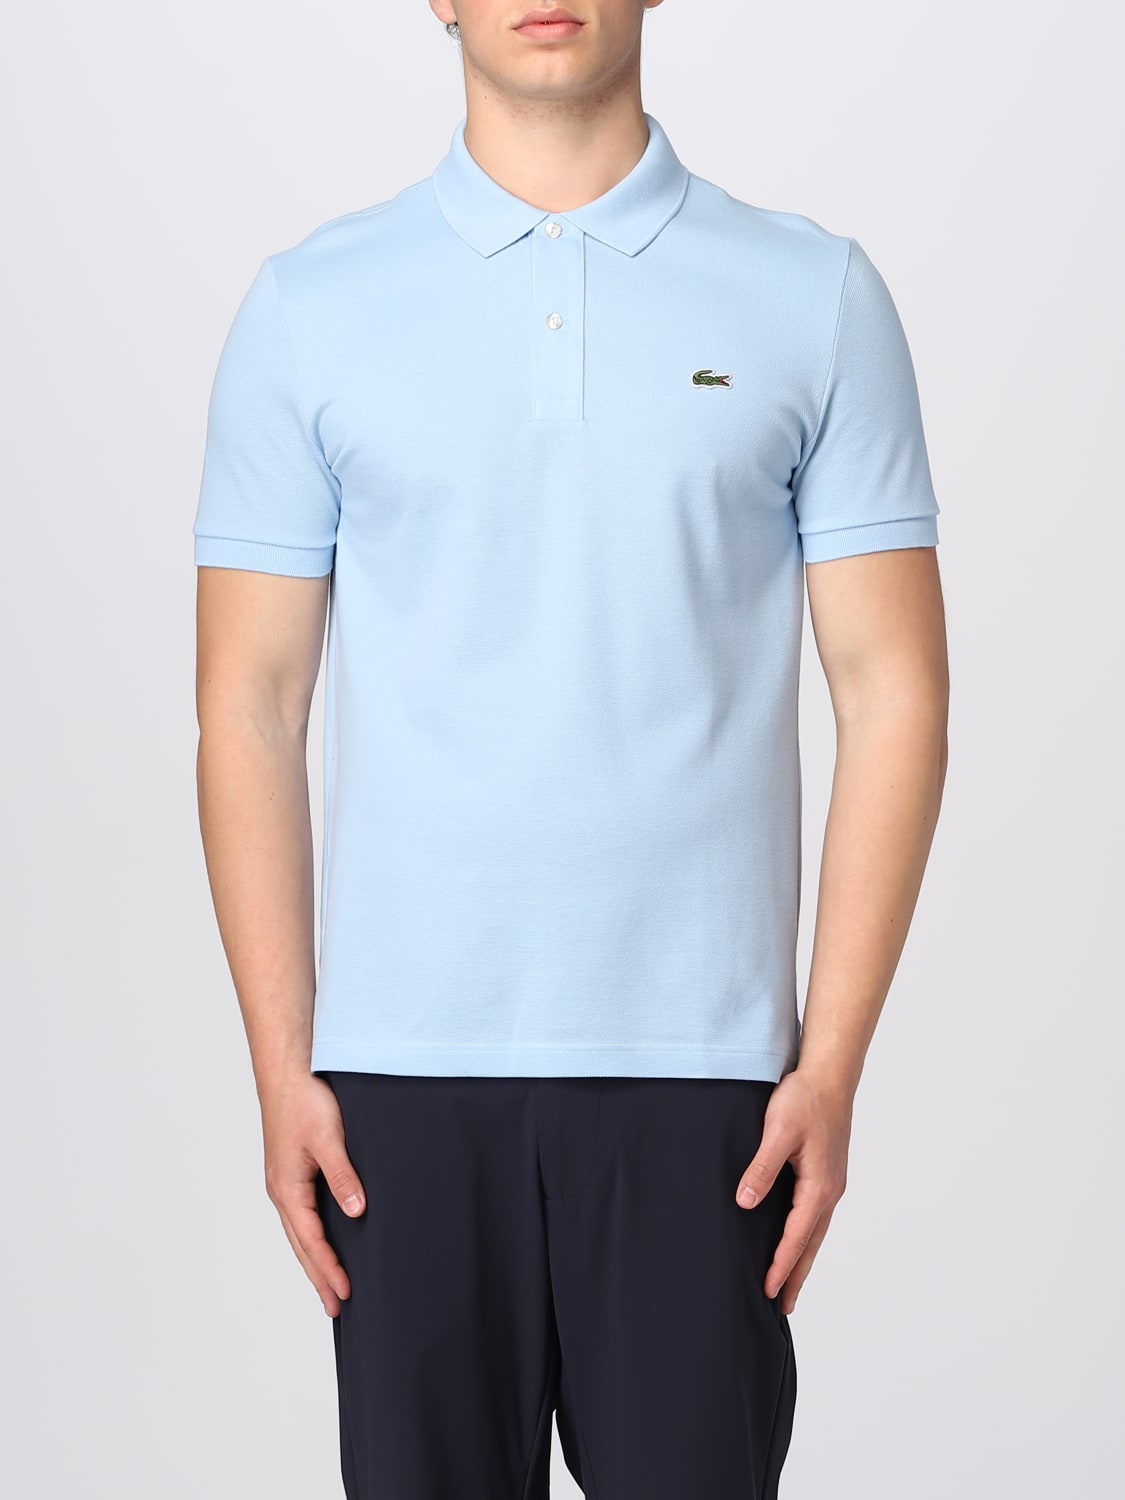 Utænkelig Borger Vedholdende LACOSTE: polo shirt for man - Sky Blue | Lacoste polo shirt PH4012 online  on GIGLIO.COM